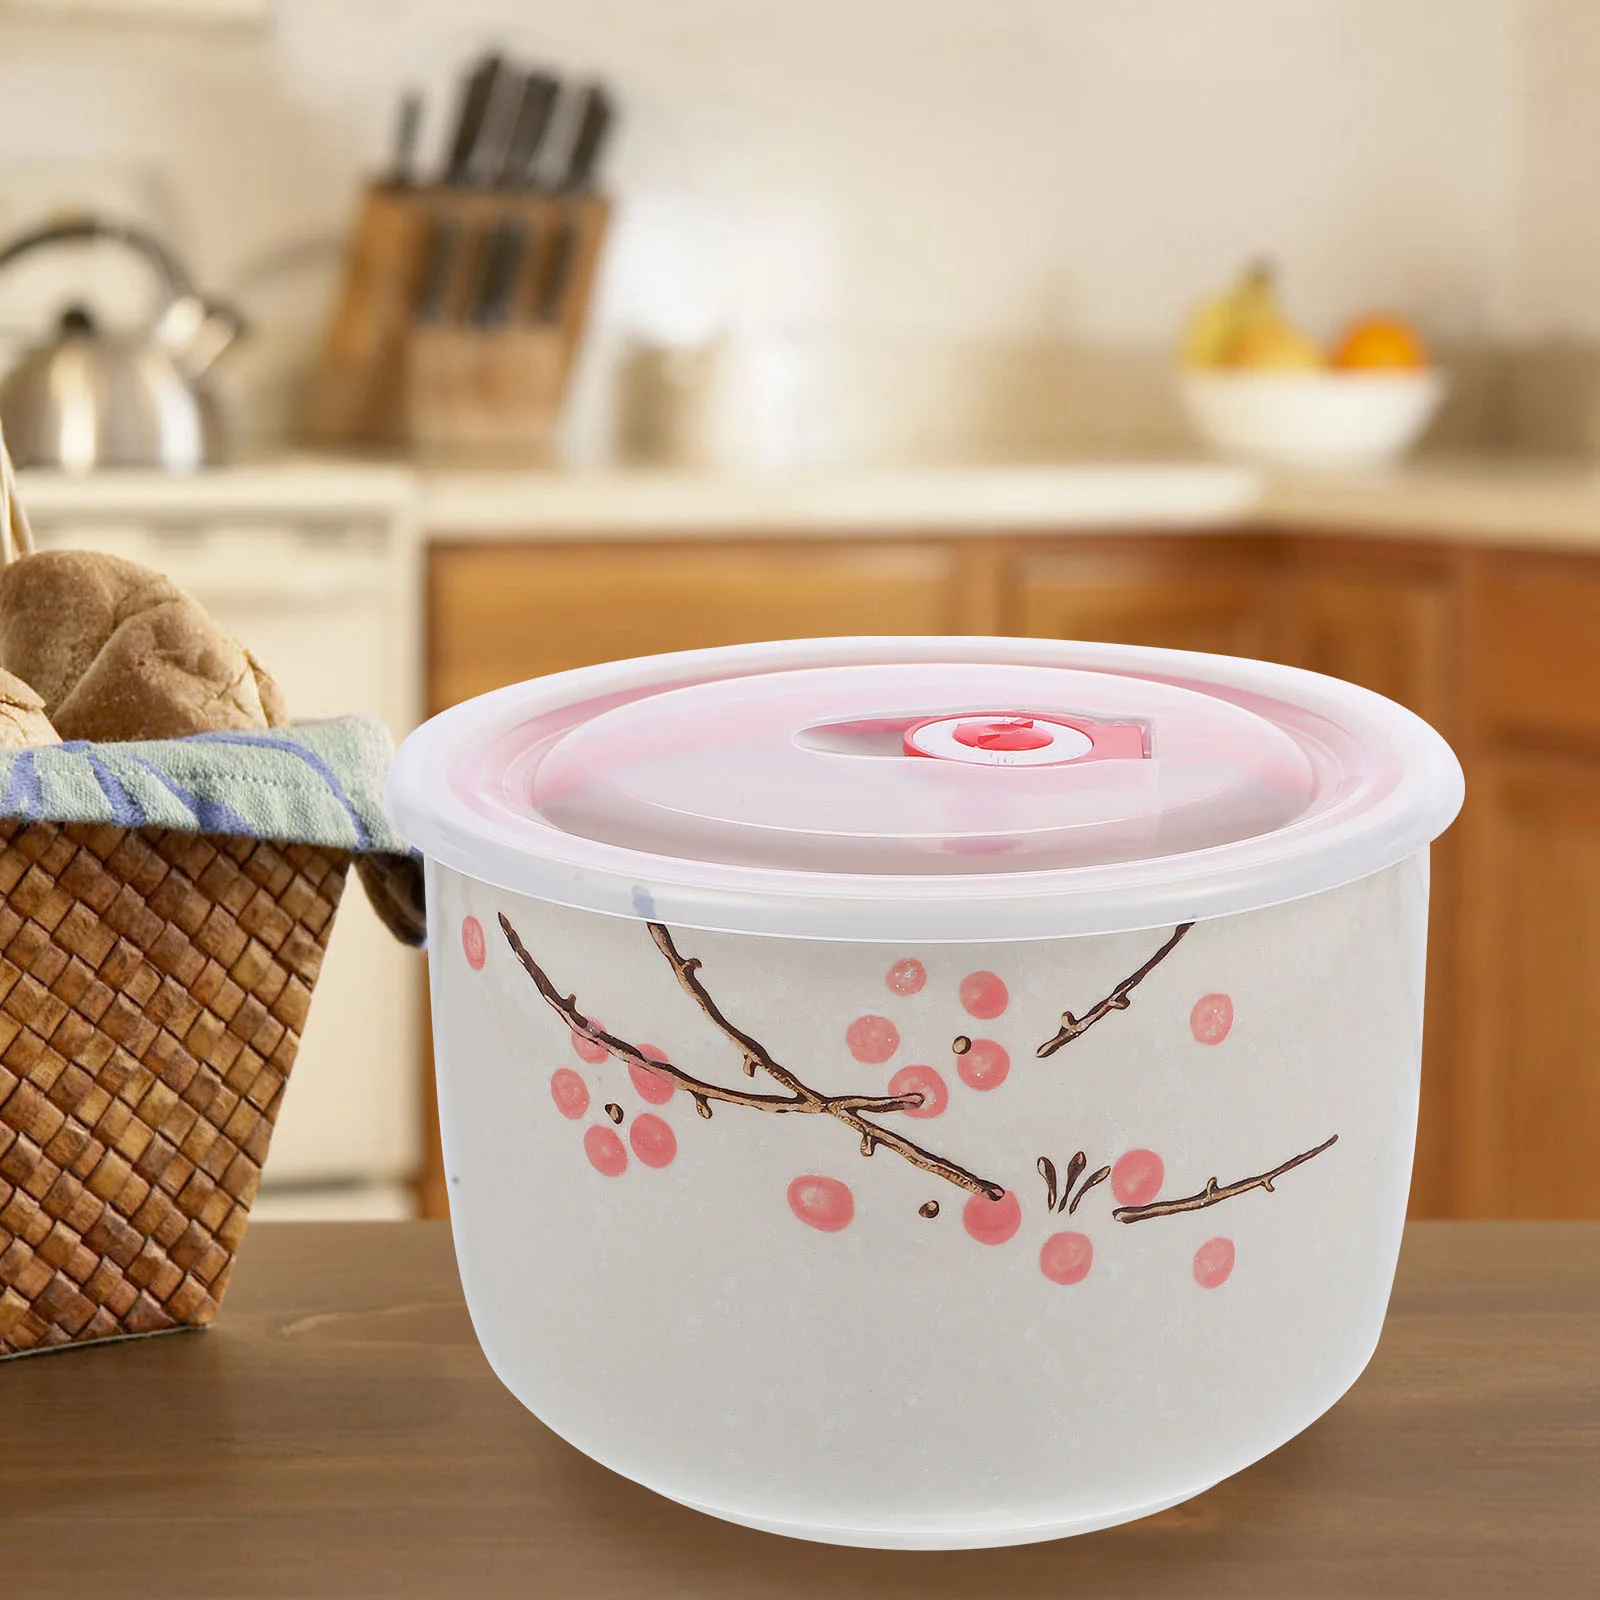 

Convenient Food Bowl Bento Daily Use Ramen Compact Instant Noodle Lidded Design Reusable Household Lunch Eat Bowls Lids